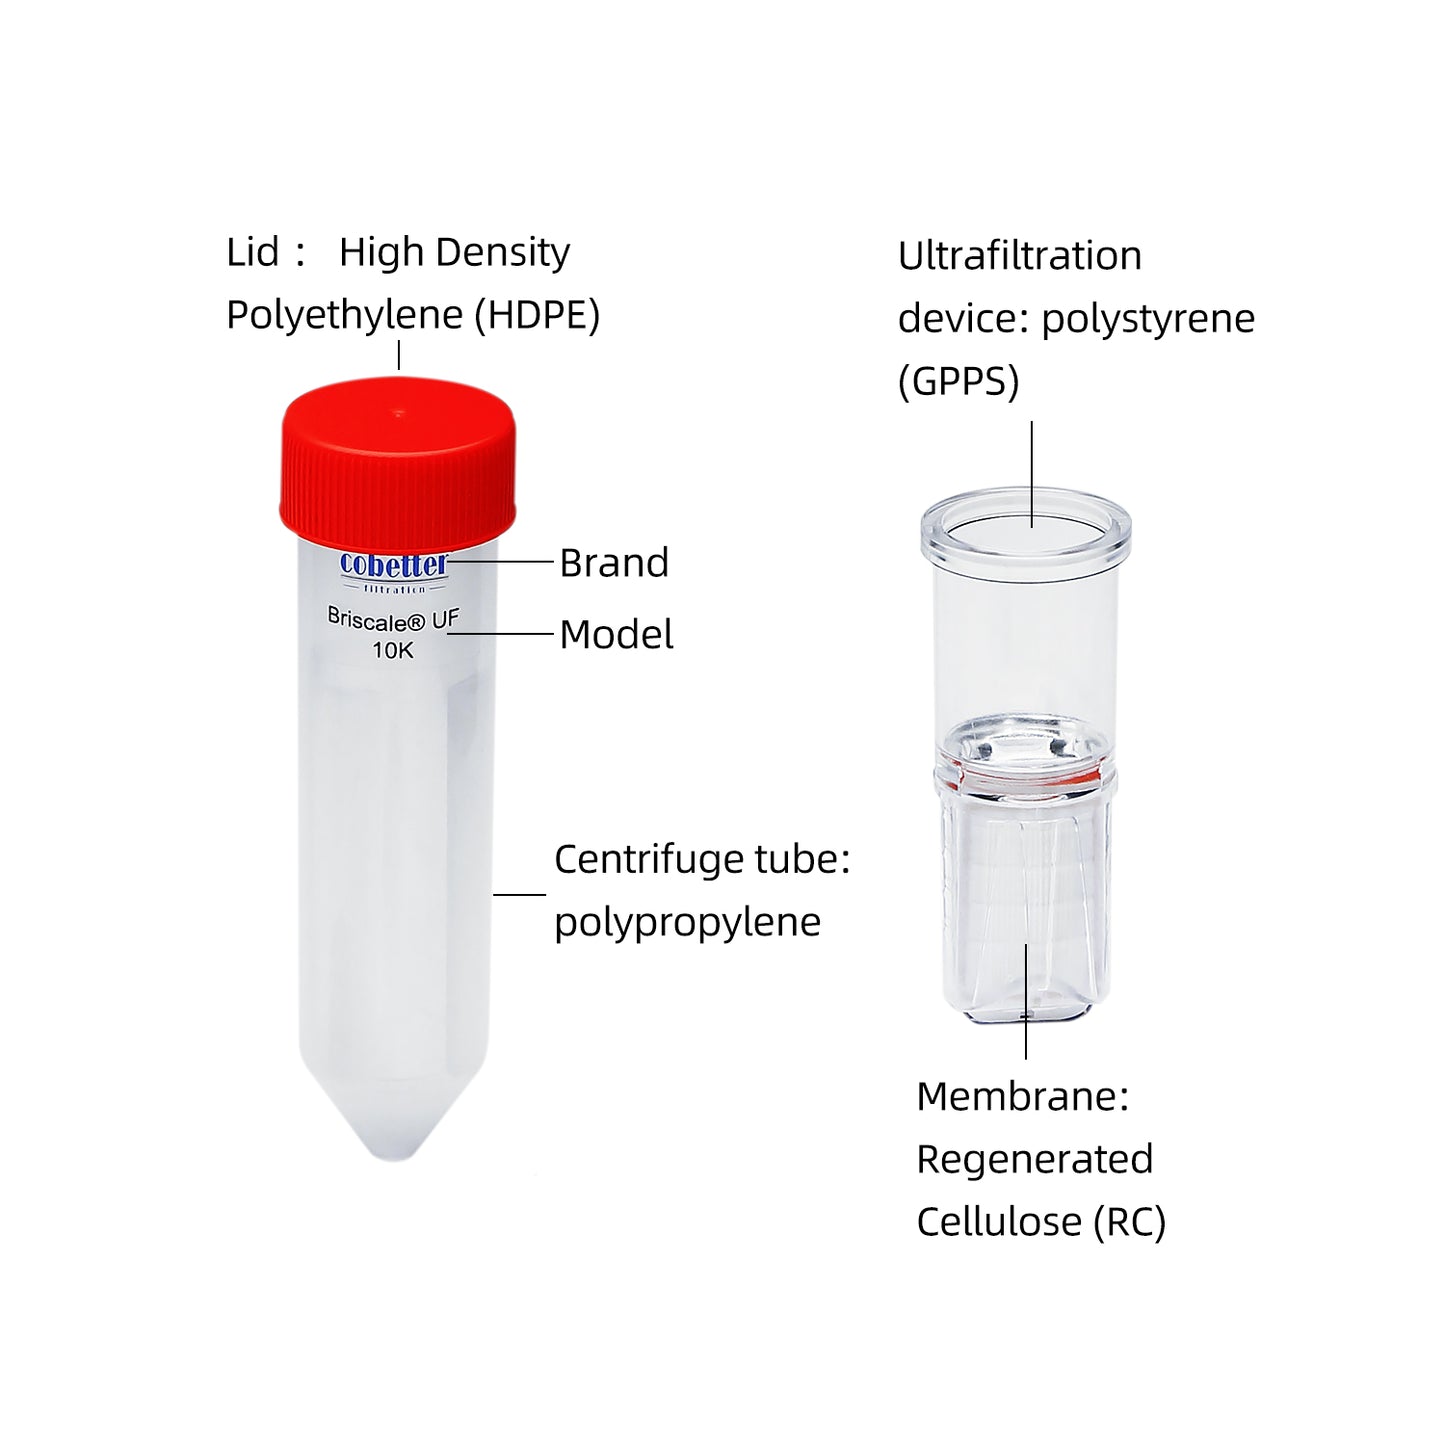 COBETTER 15mL Ultrafiltration 3 kDa Centrifugal Filter with Regenerated Cellulose RC Membrane